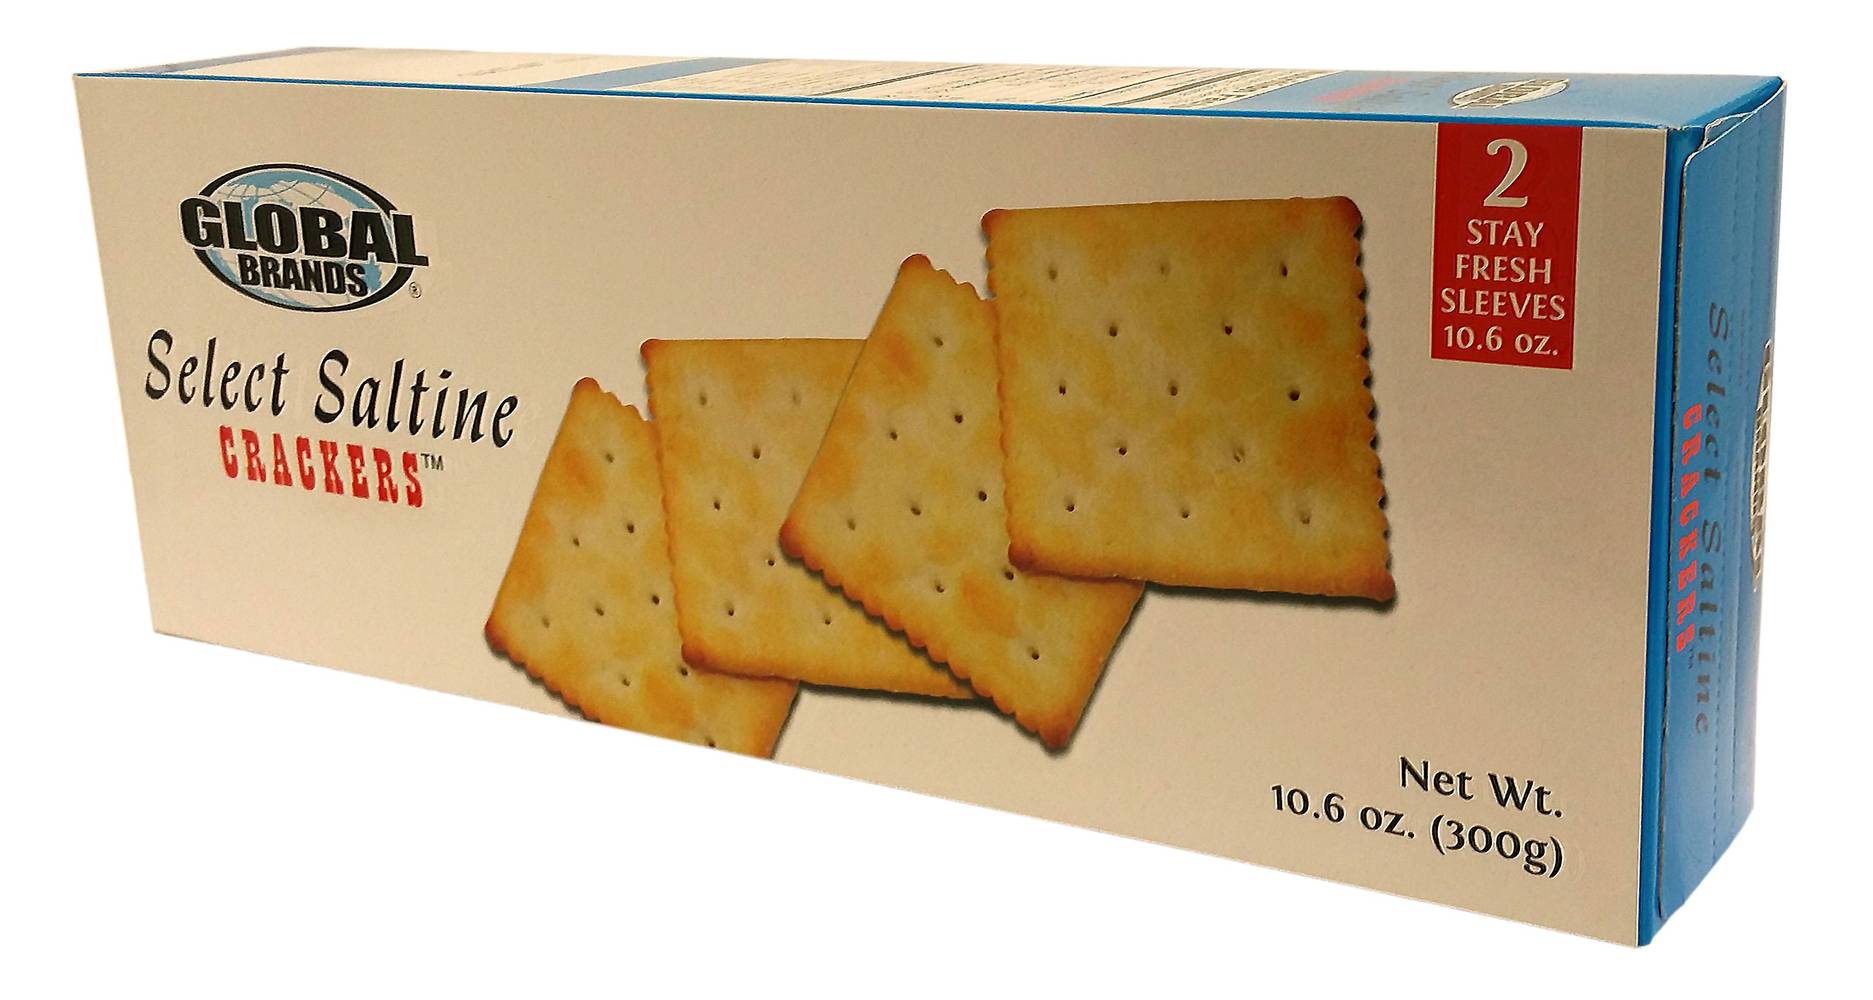 Global Brands Select Saltine Crackers (10.6 oz)